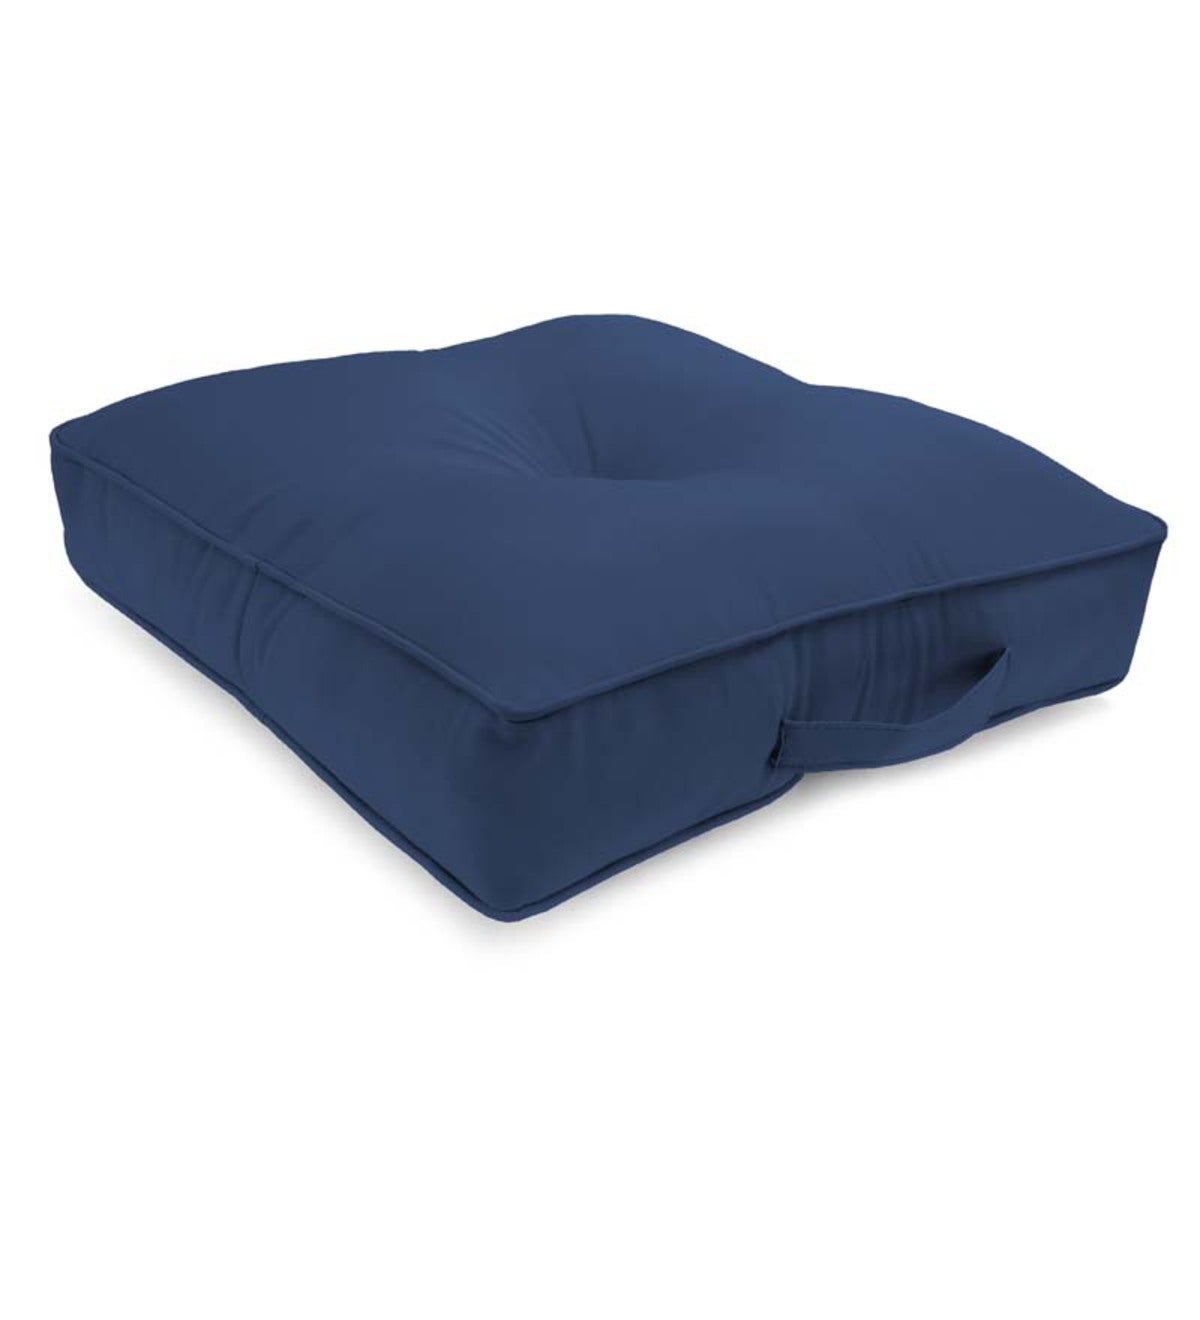 Sunbrella® Classic Tufted Floor Cushion With Handle, 20"sq. x 4" - Navy